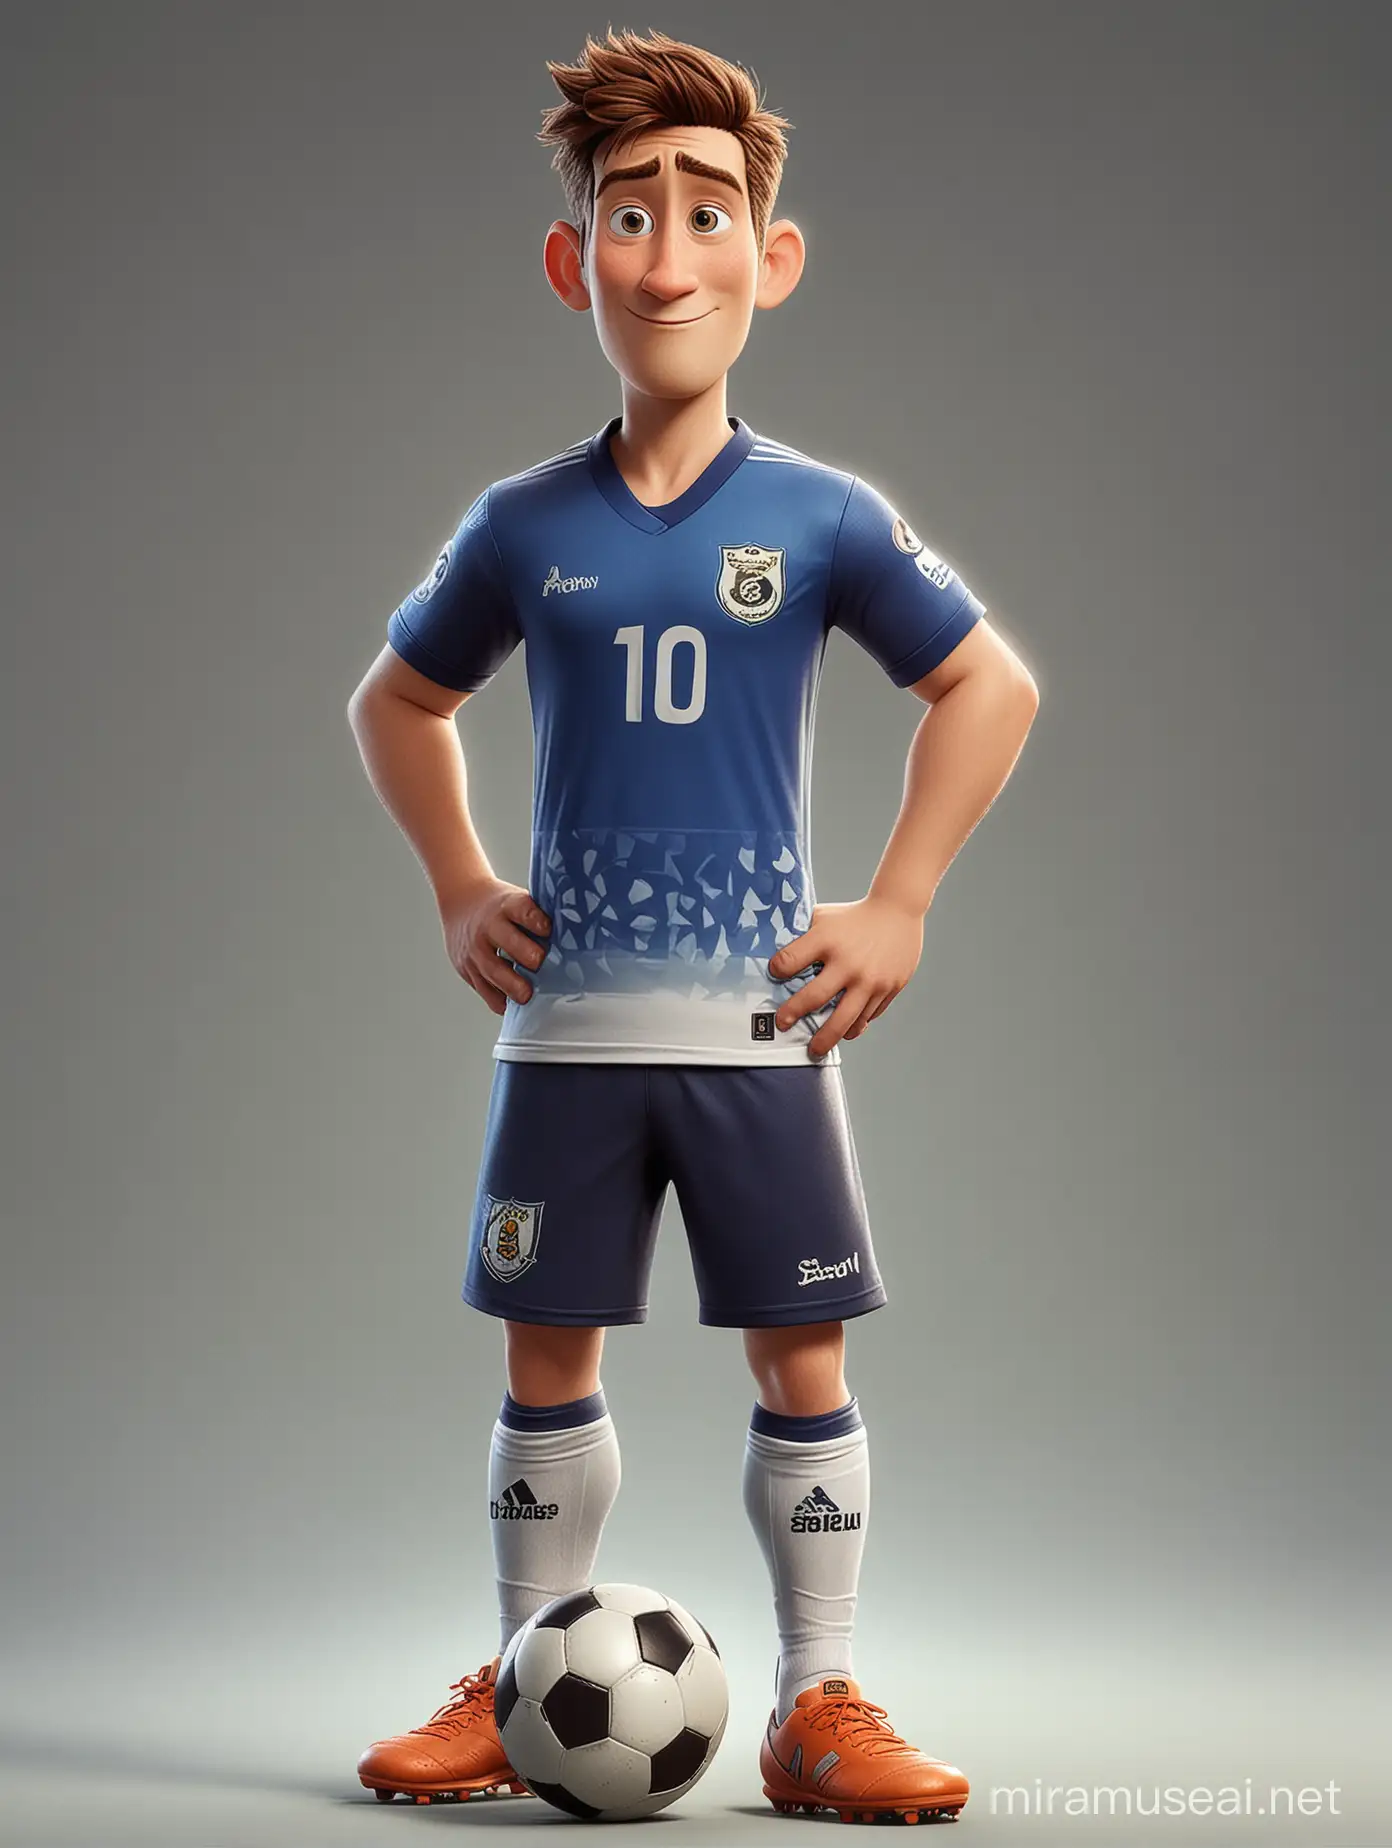 Pixar and Disney Style Full Body Cartoon Soccer Player